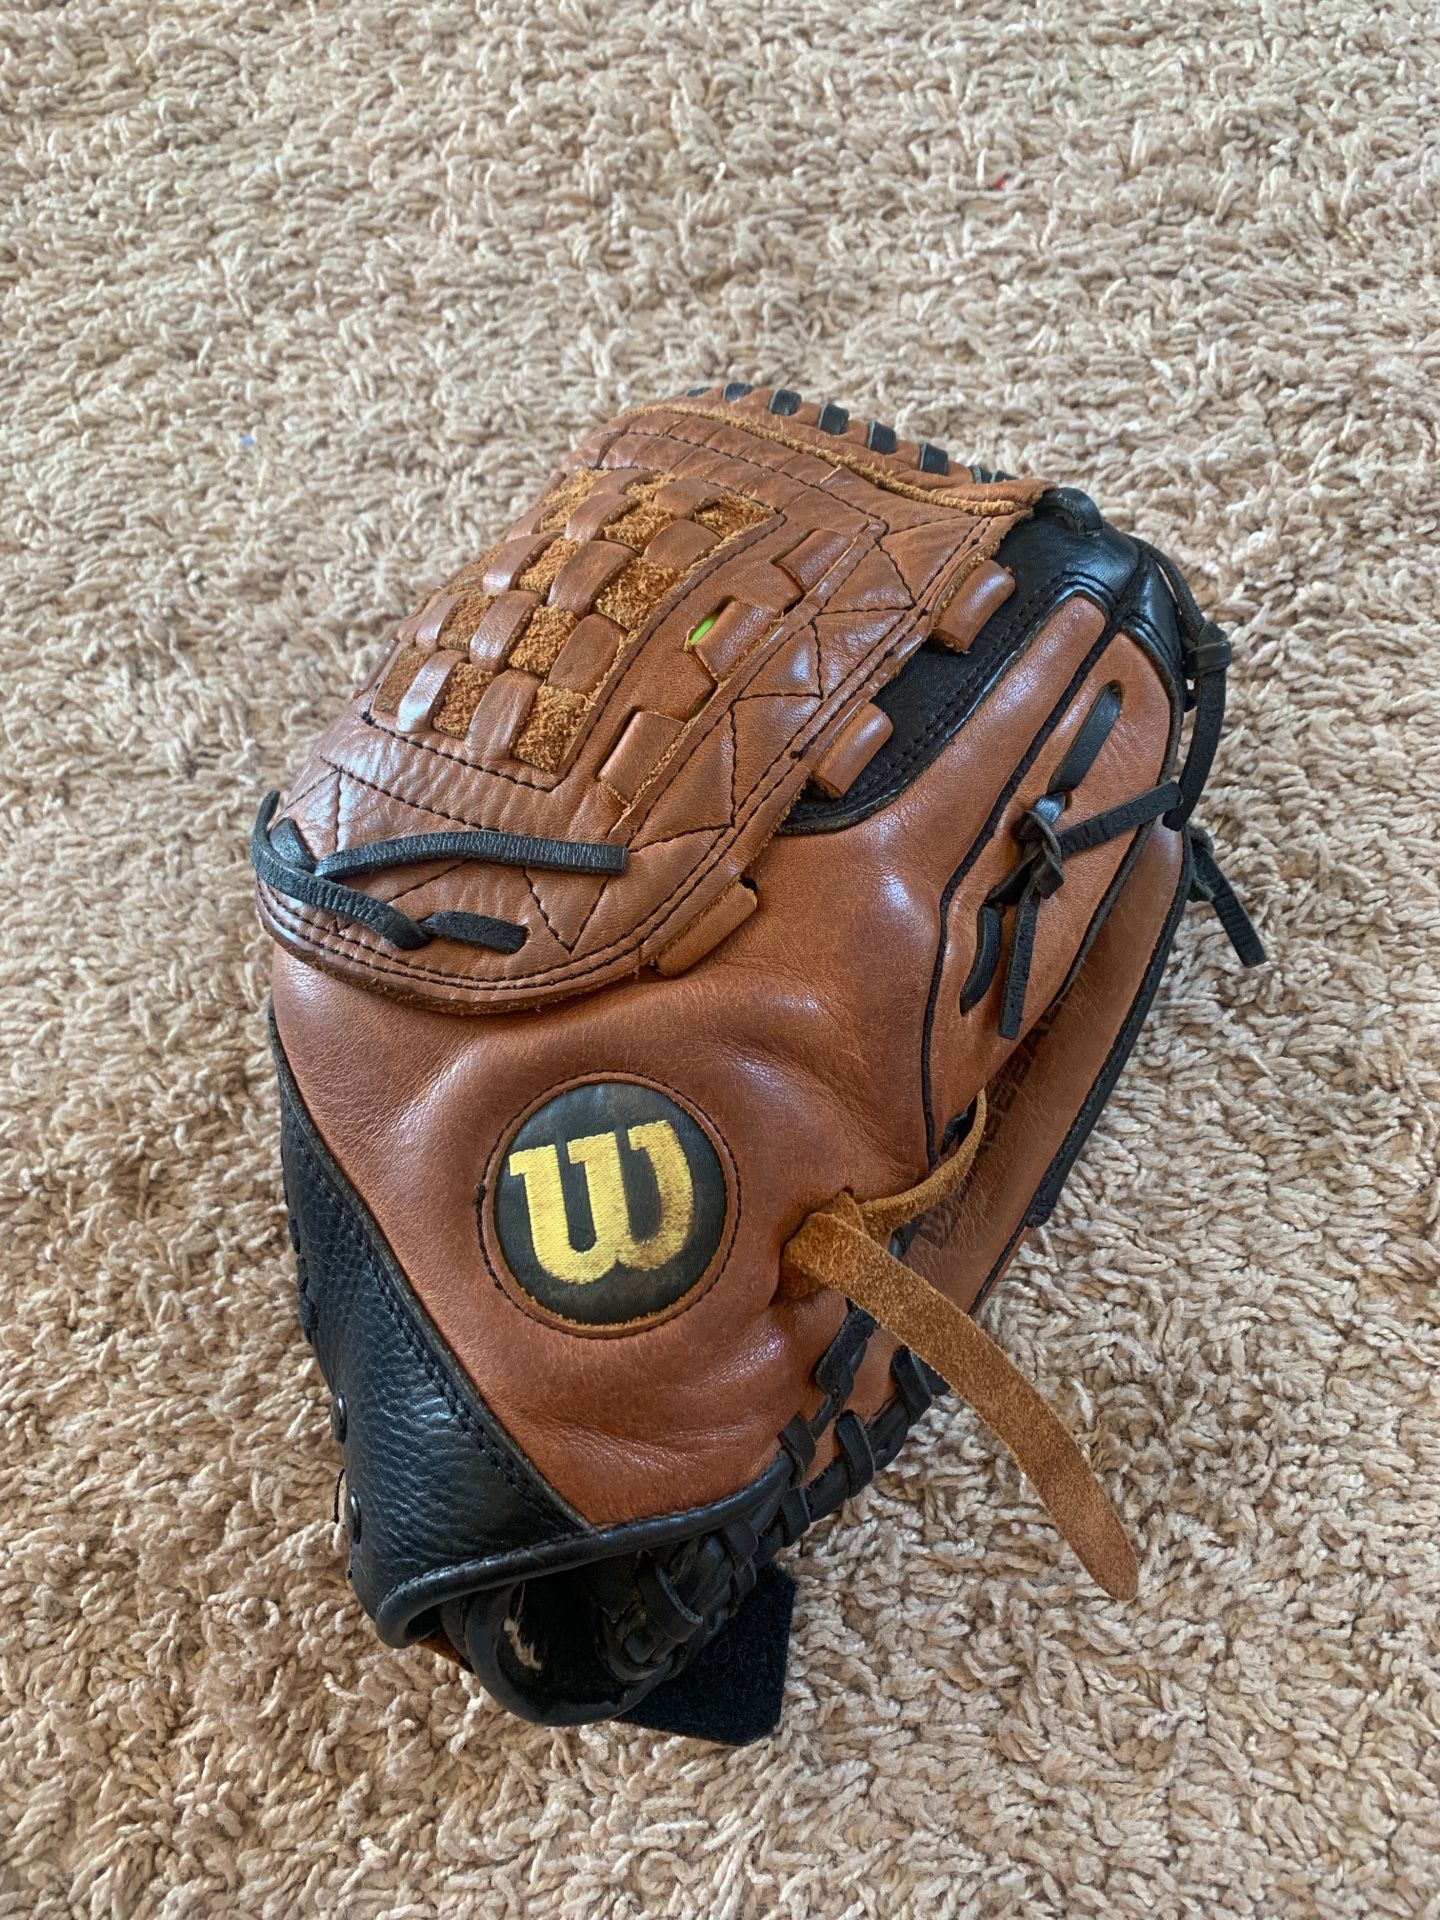 Wilson A500 Softball (baseball) Glove